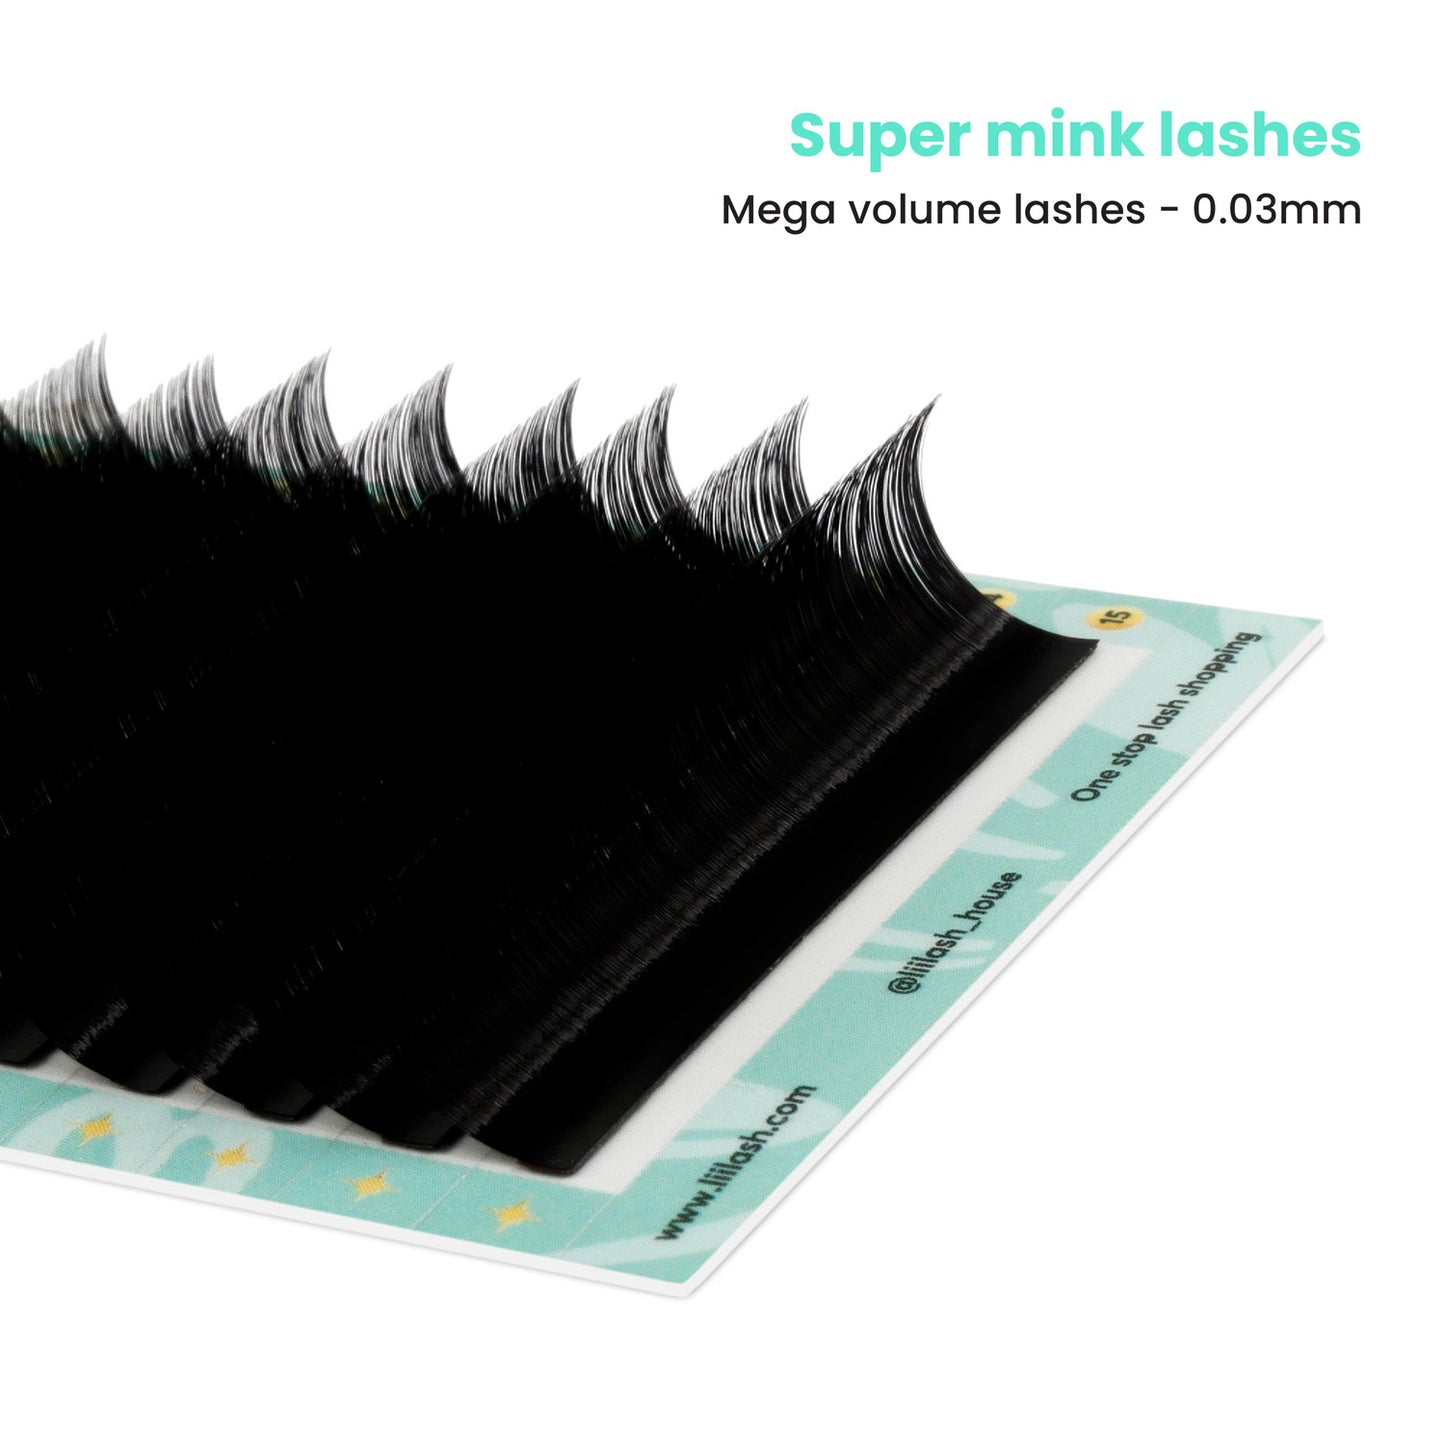 Super-Mink-mega-volume-lashes-0.03mm